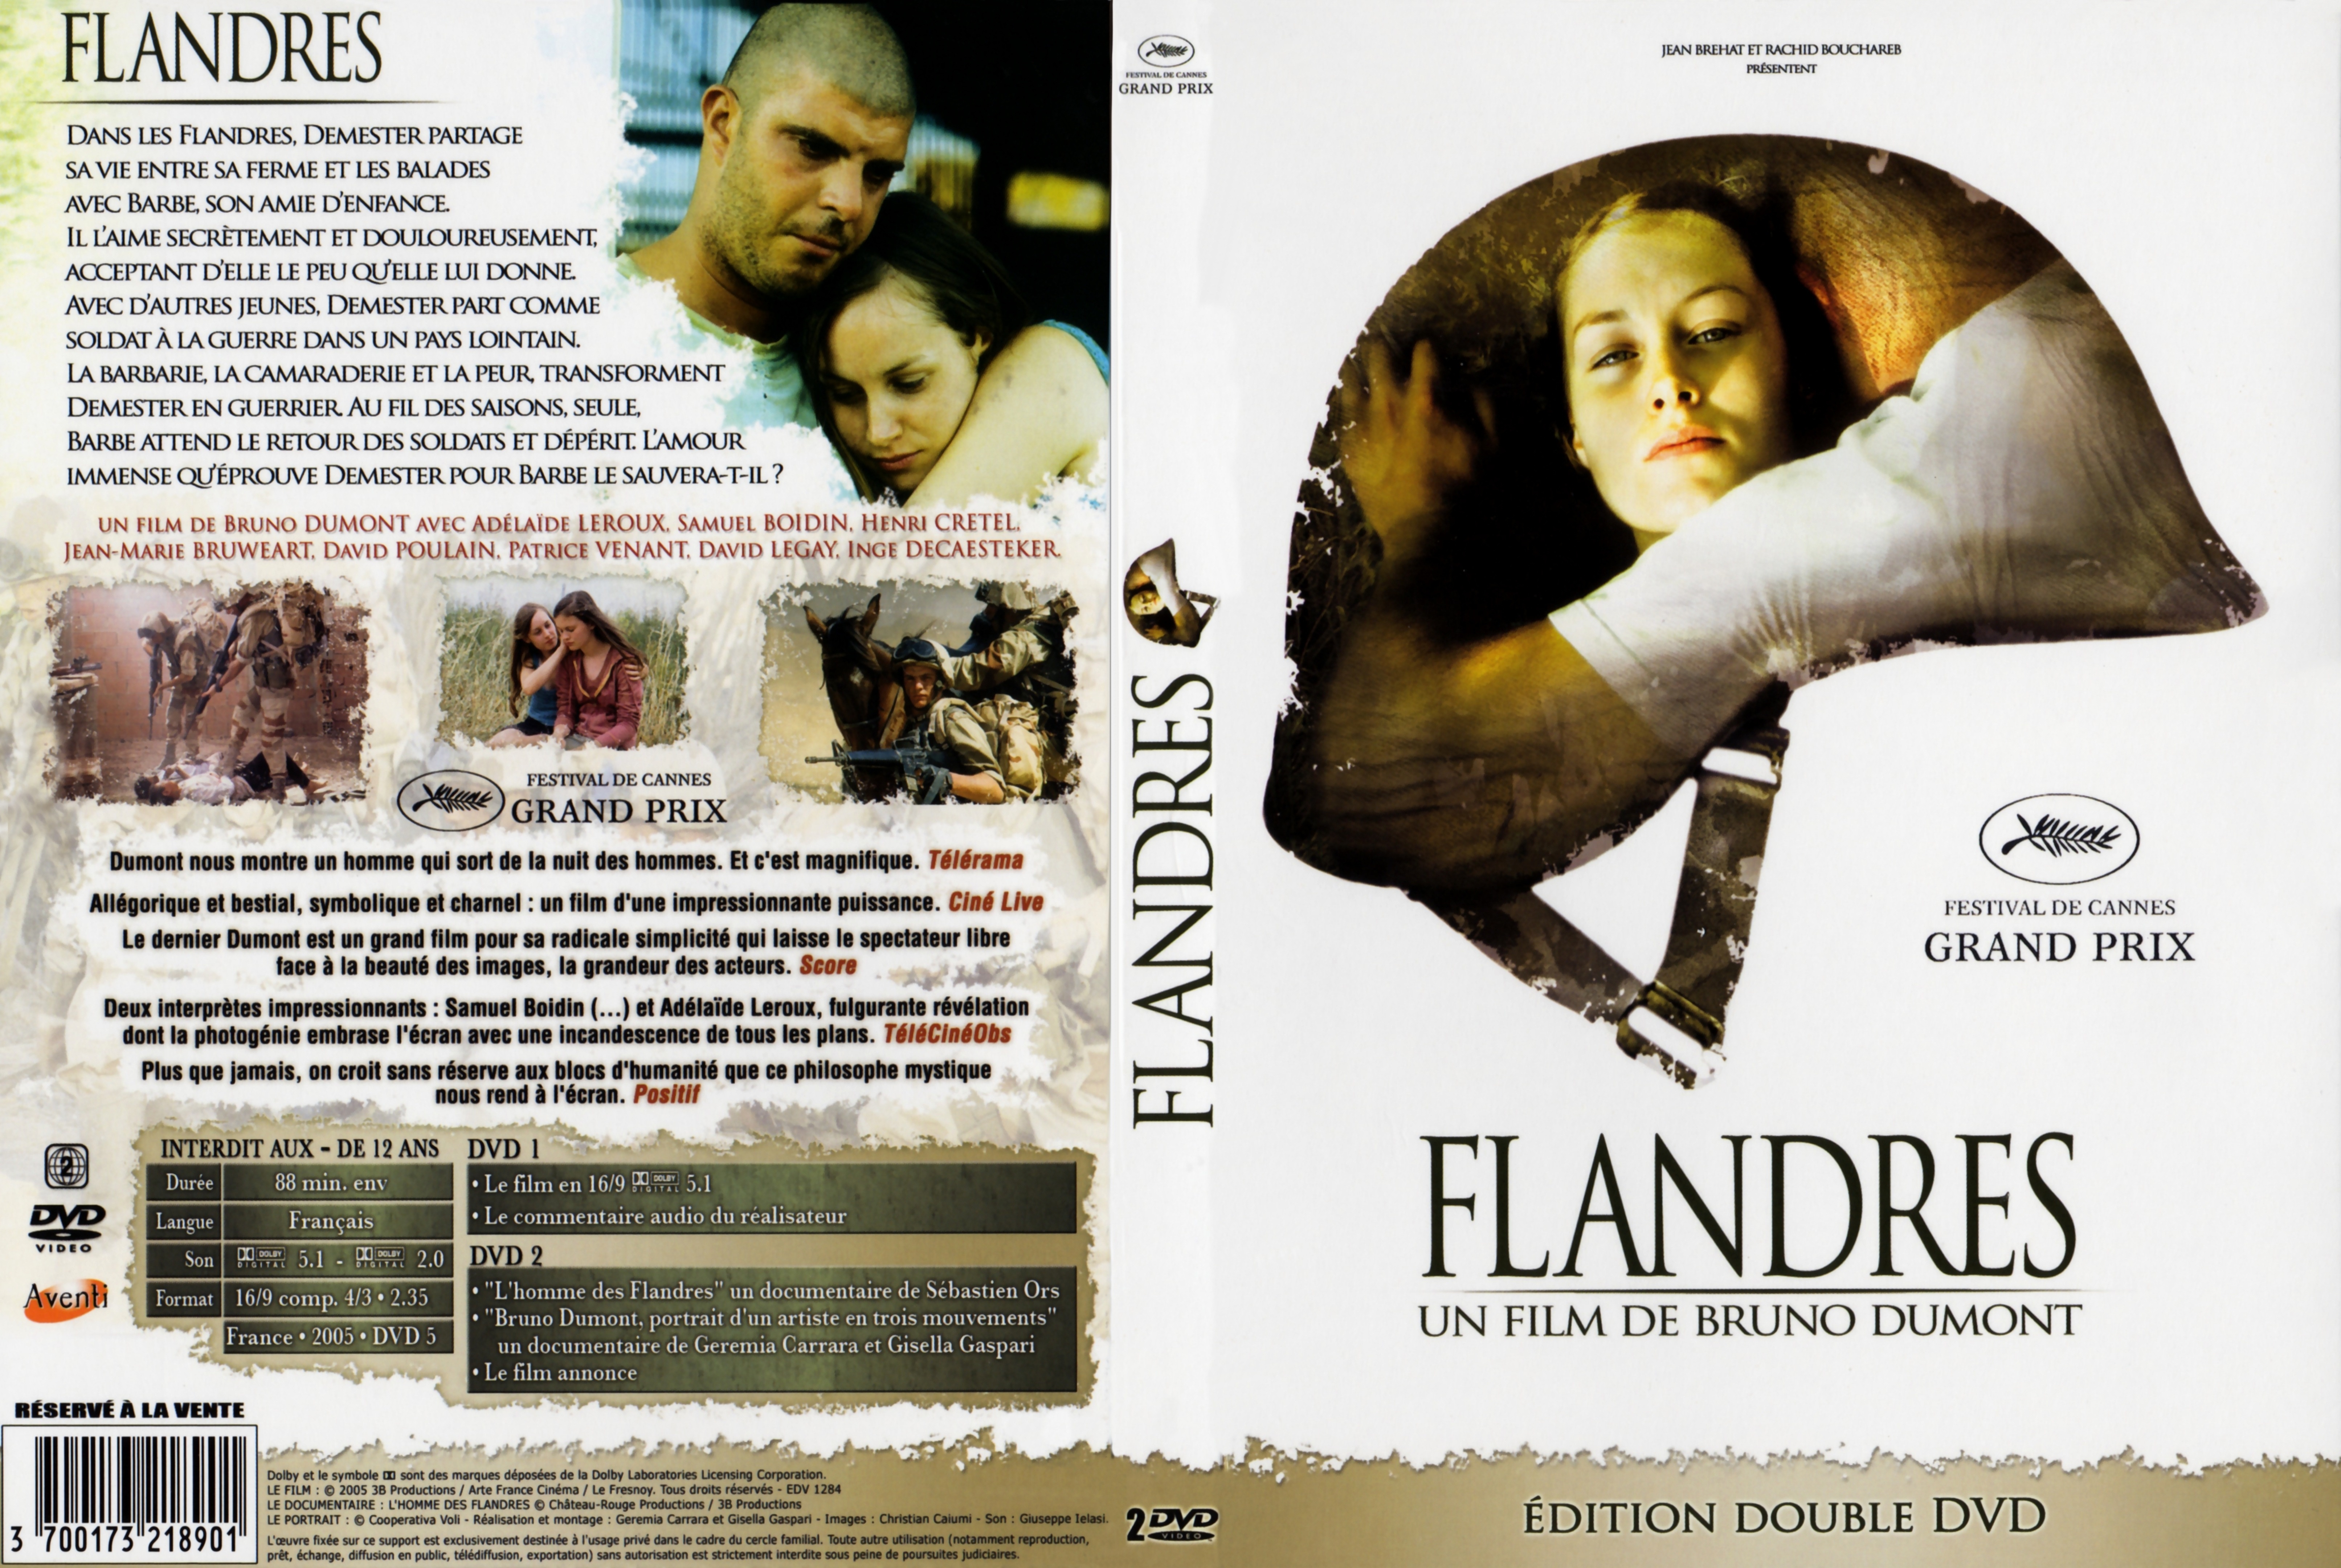 Jaquette DVD Flandres